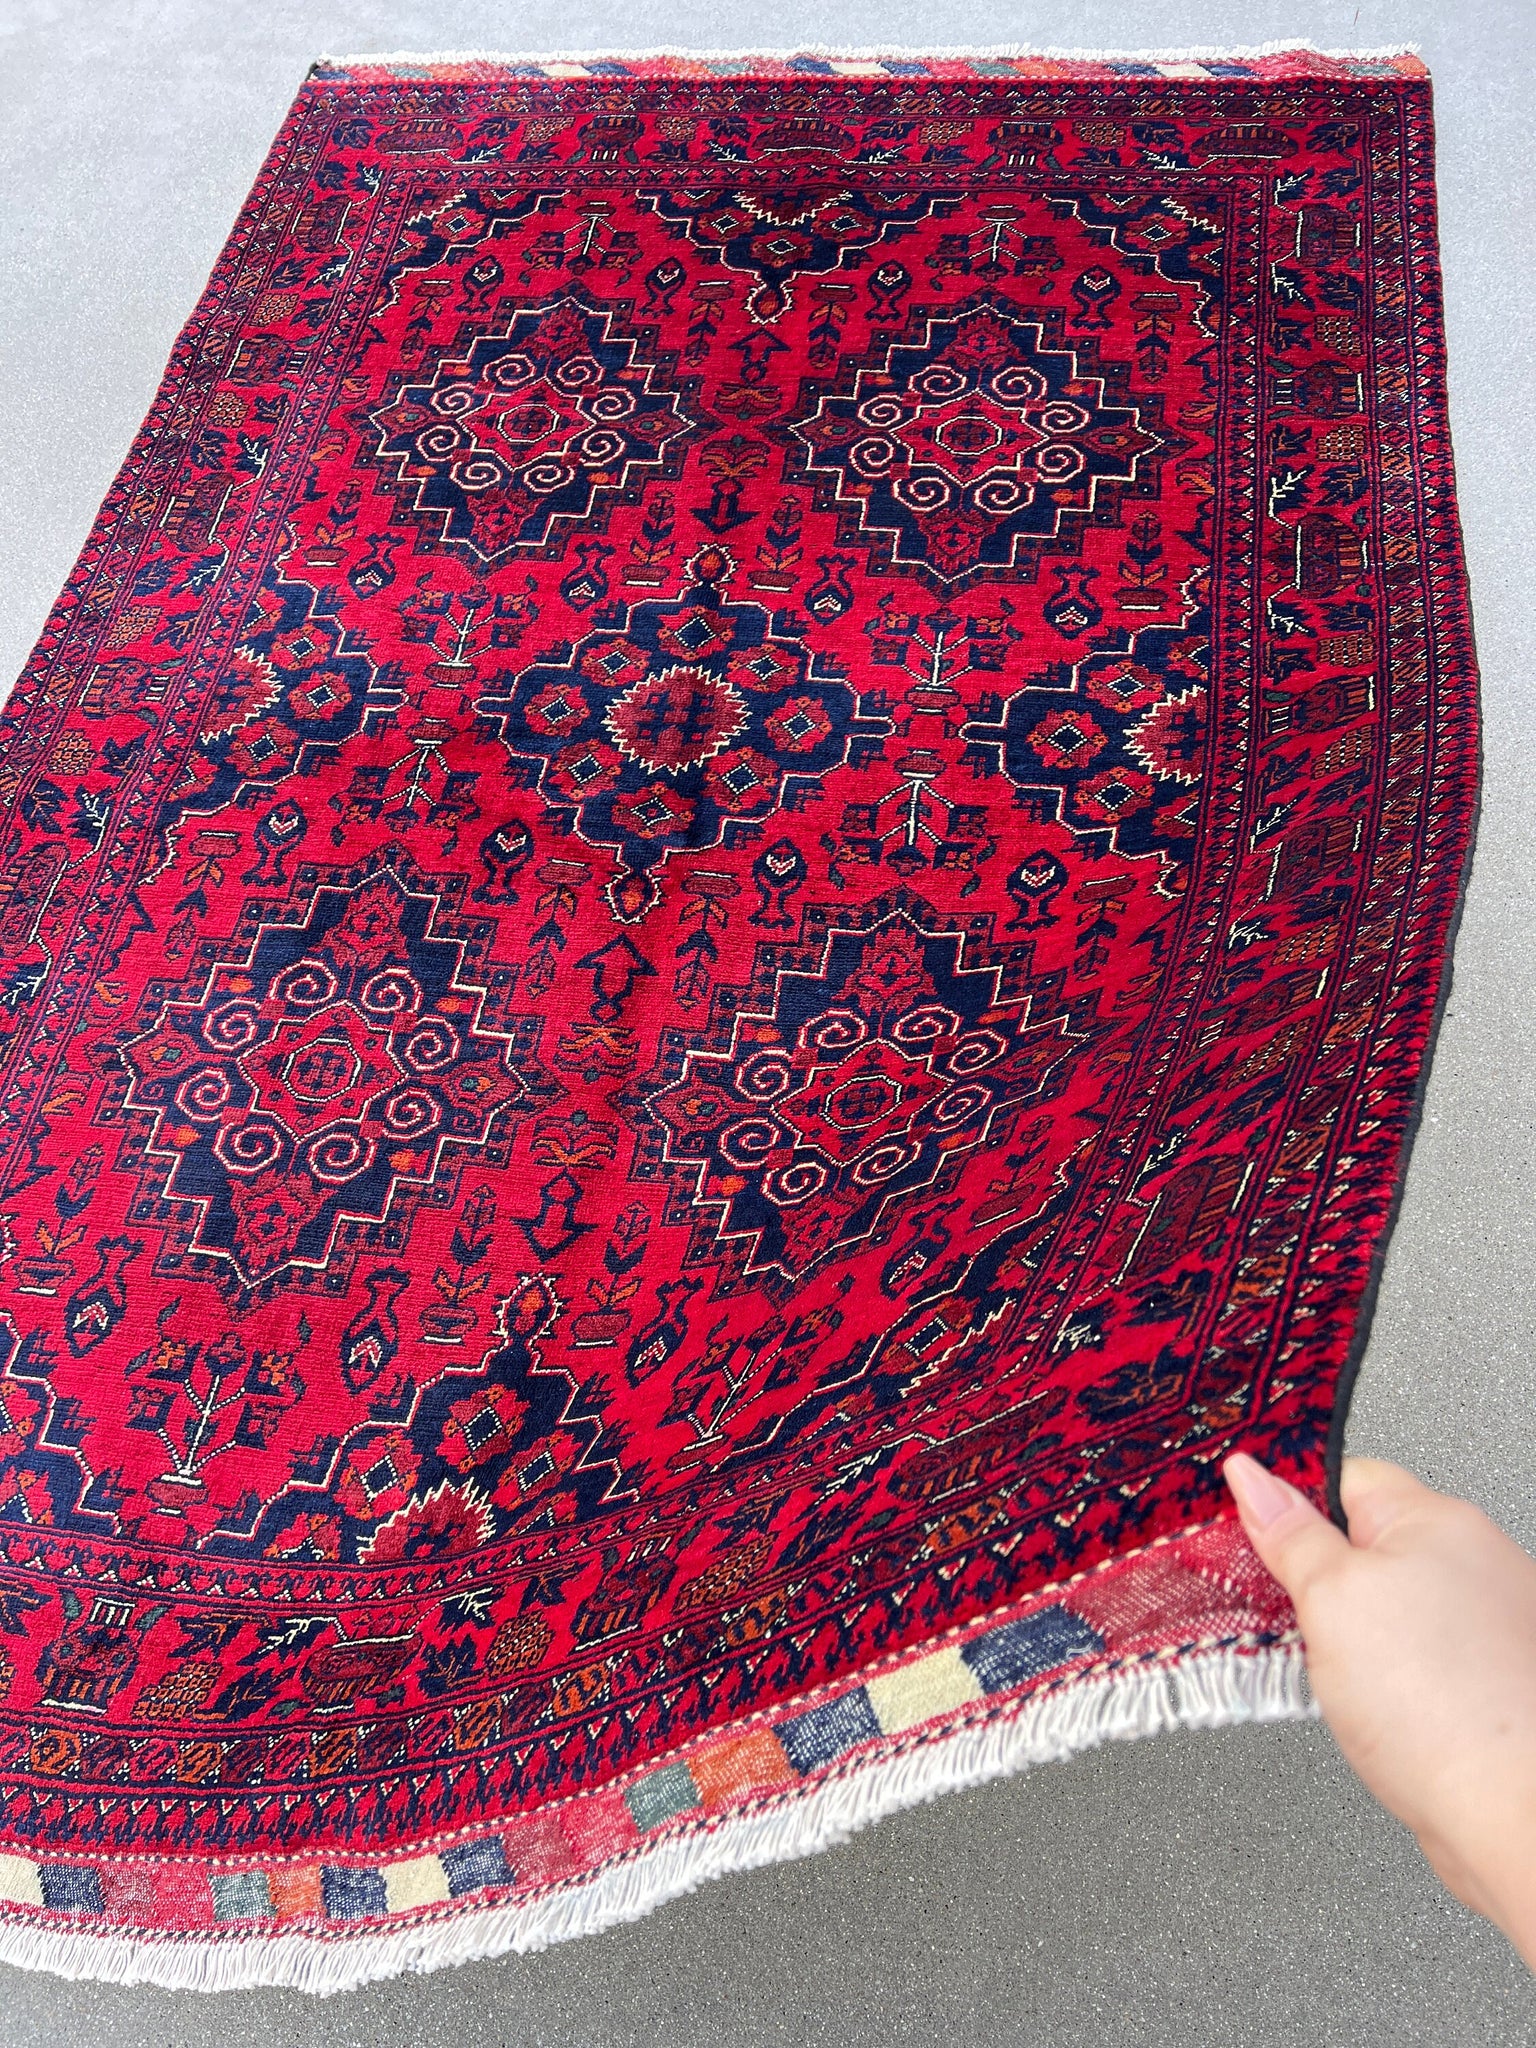 4x6 (120x185) Handmade Afghan Rug | Cherry Red Crimson Black Ivory Burnt Orange Charcoal Grey | Khal Mohammadi Wool Tribal Knotted